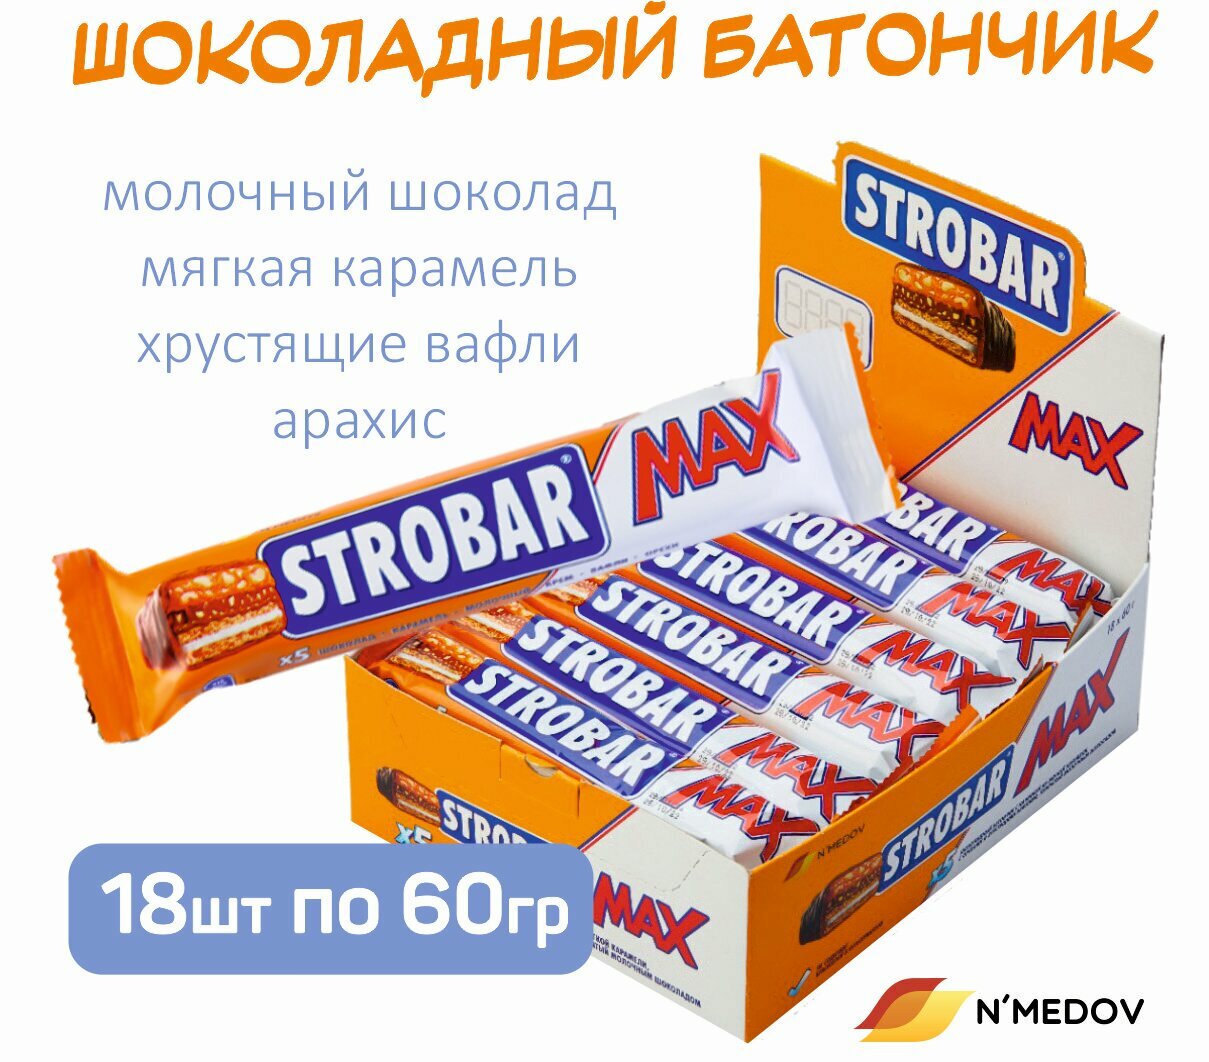 Шоколадные батончики с орехами Strobar MAX 18штук 60грамм N'Medov Узбекистан